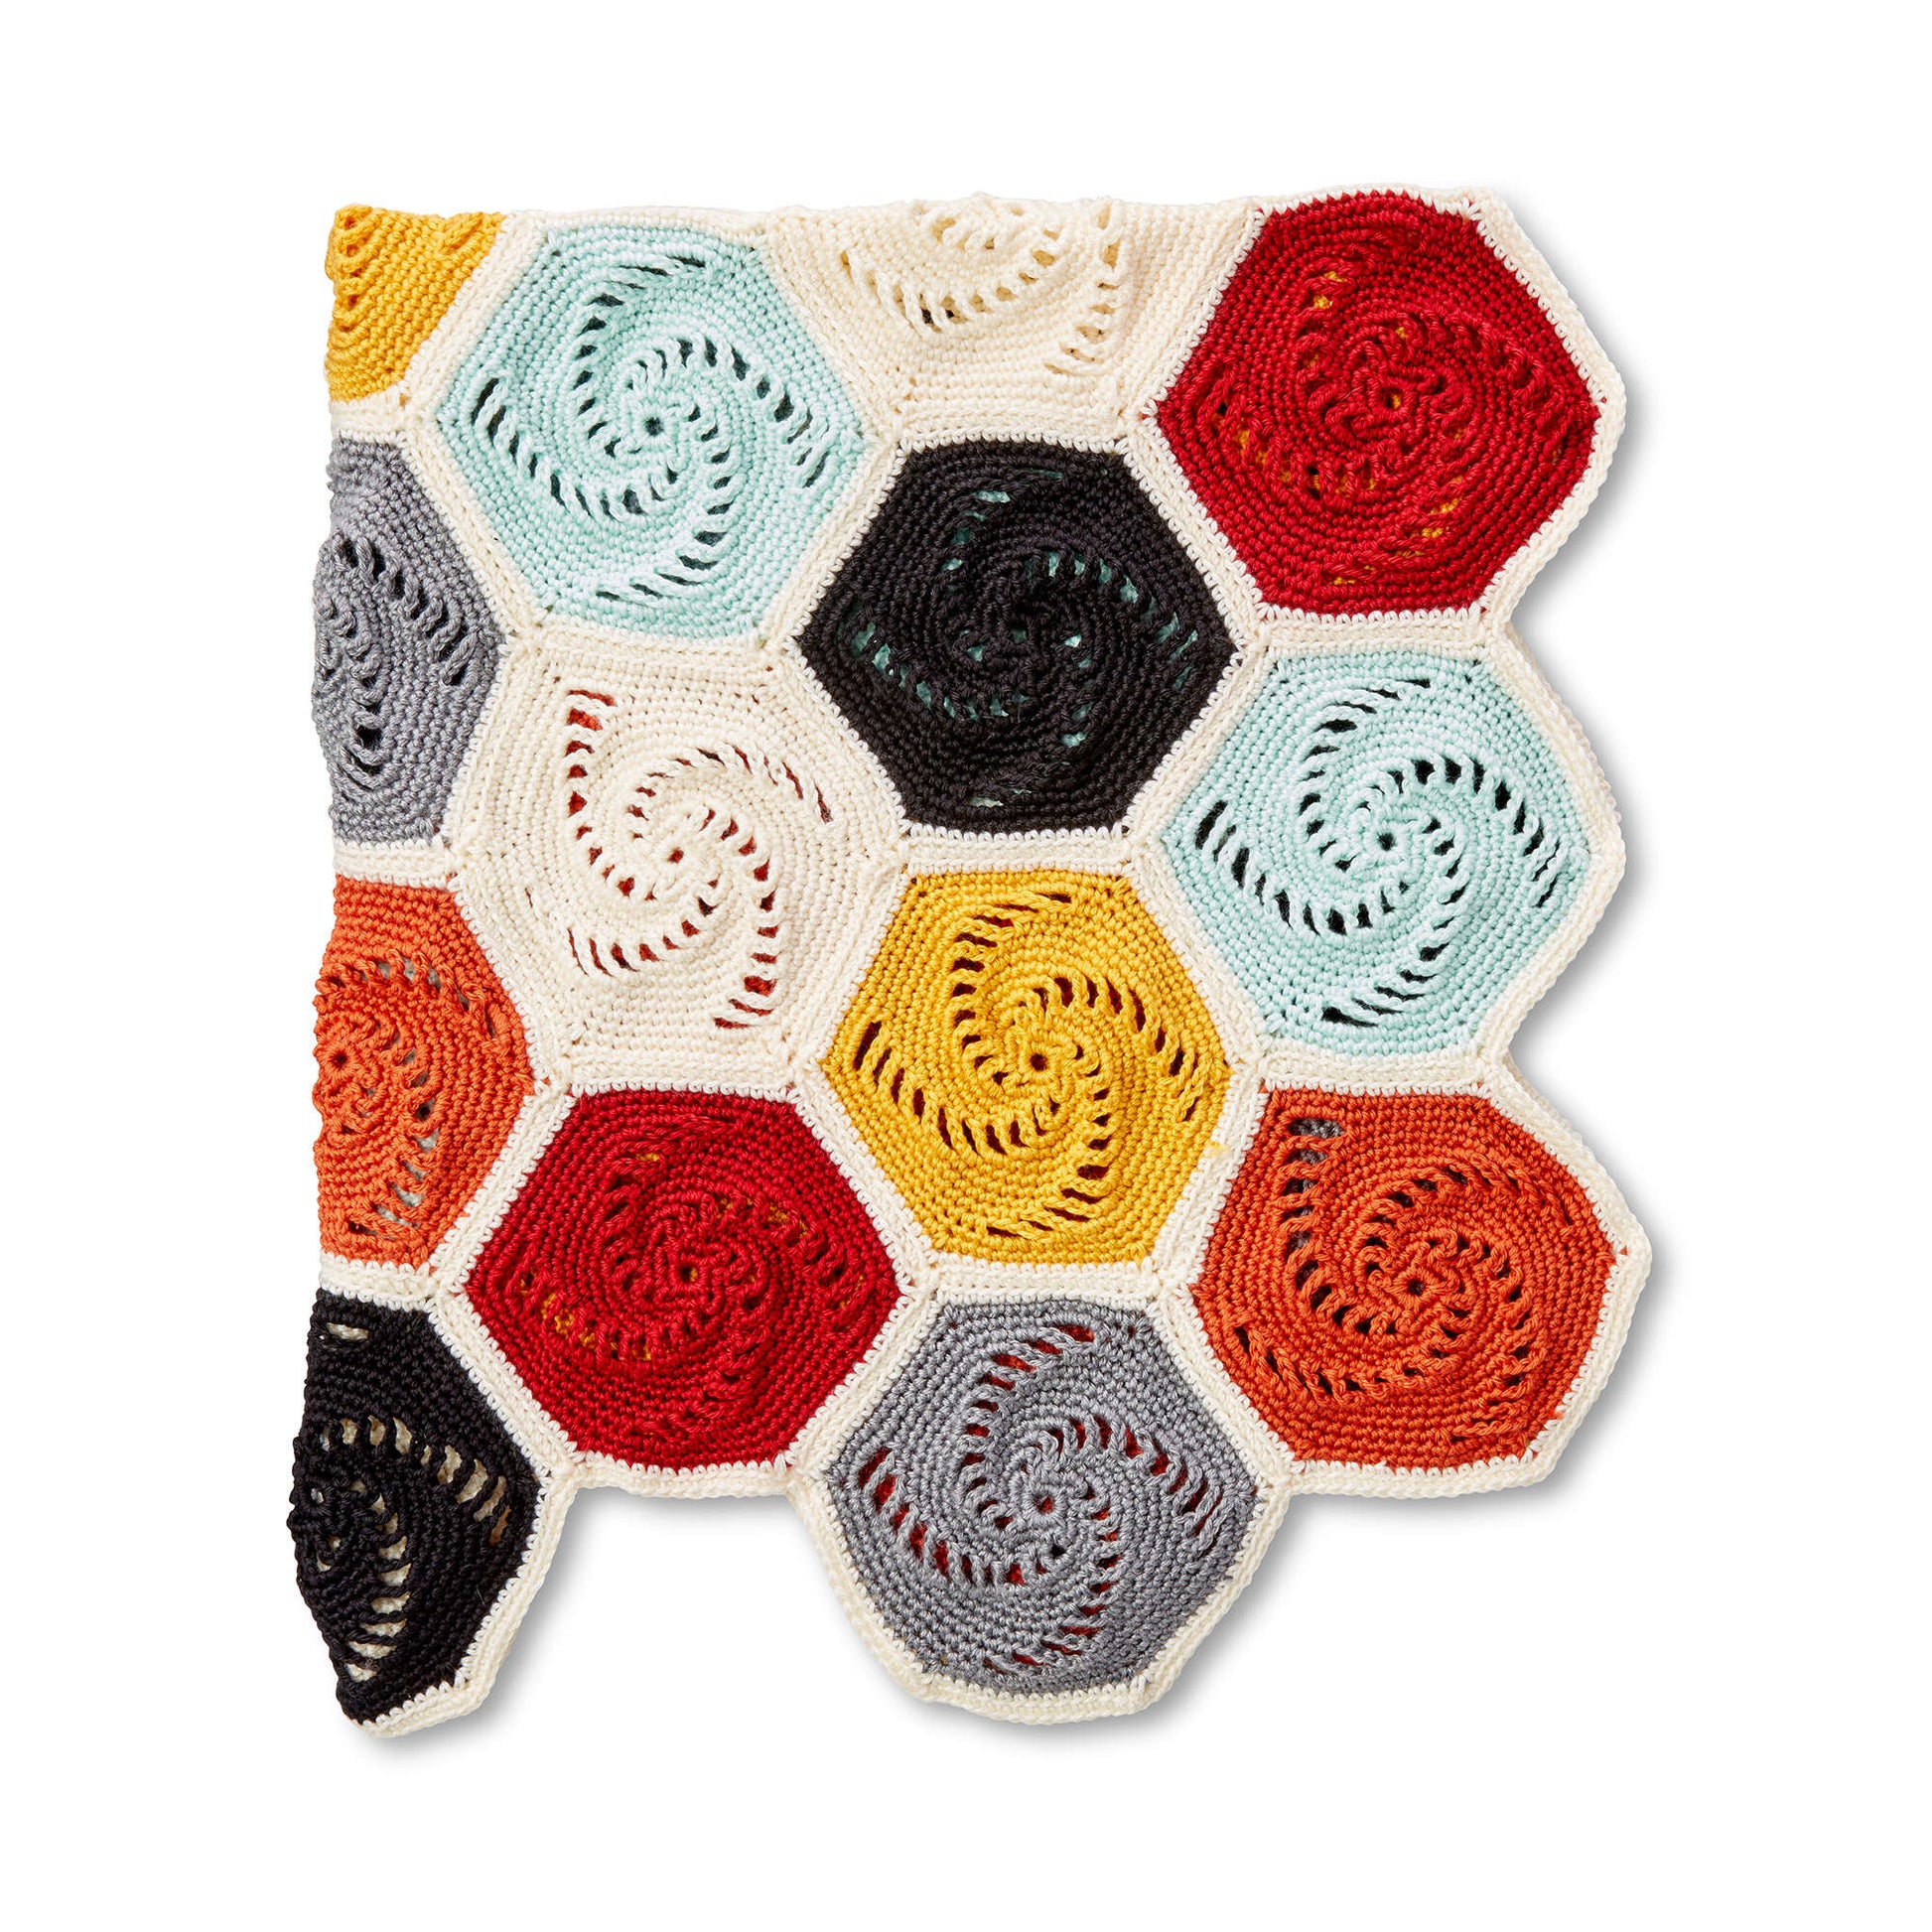 Caron Crochet Hexagons Blanket Single Size